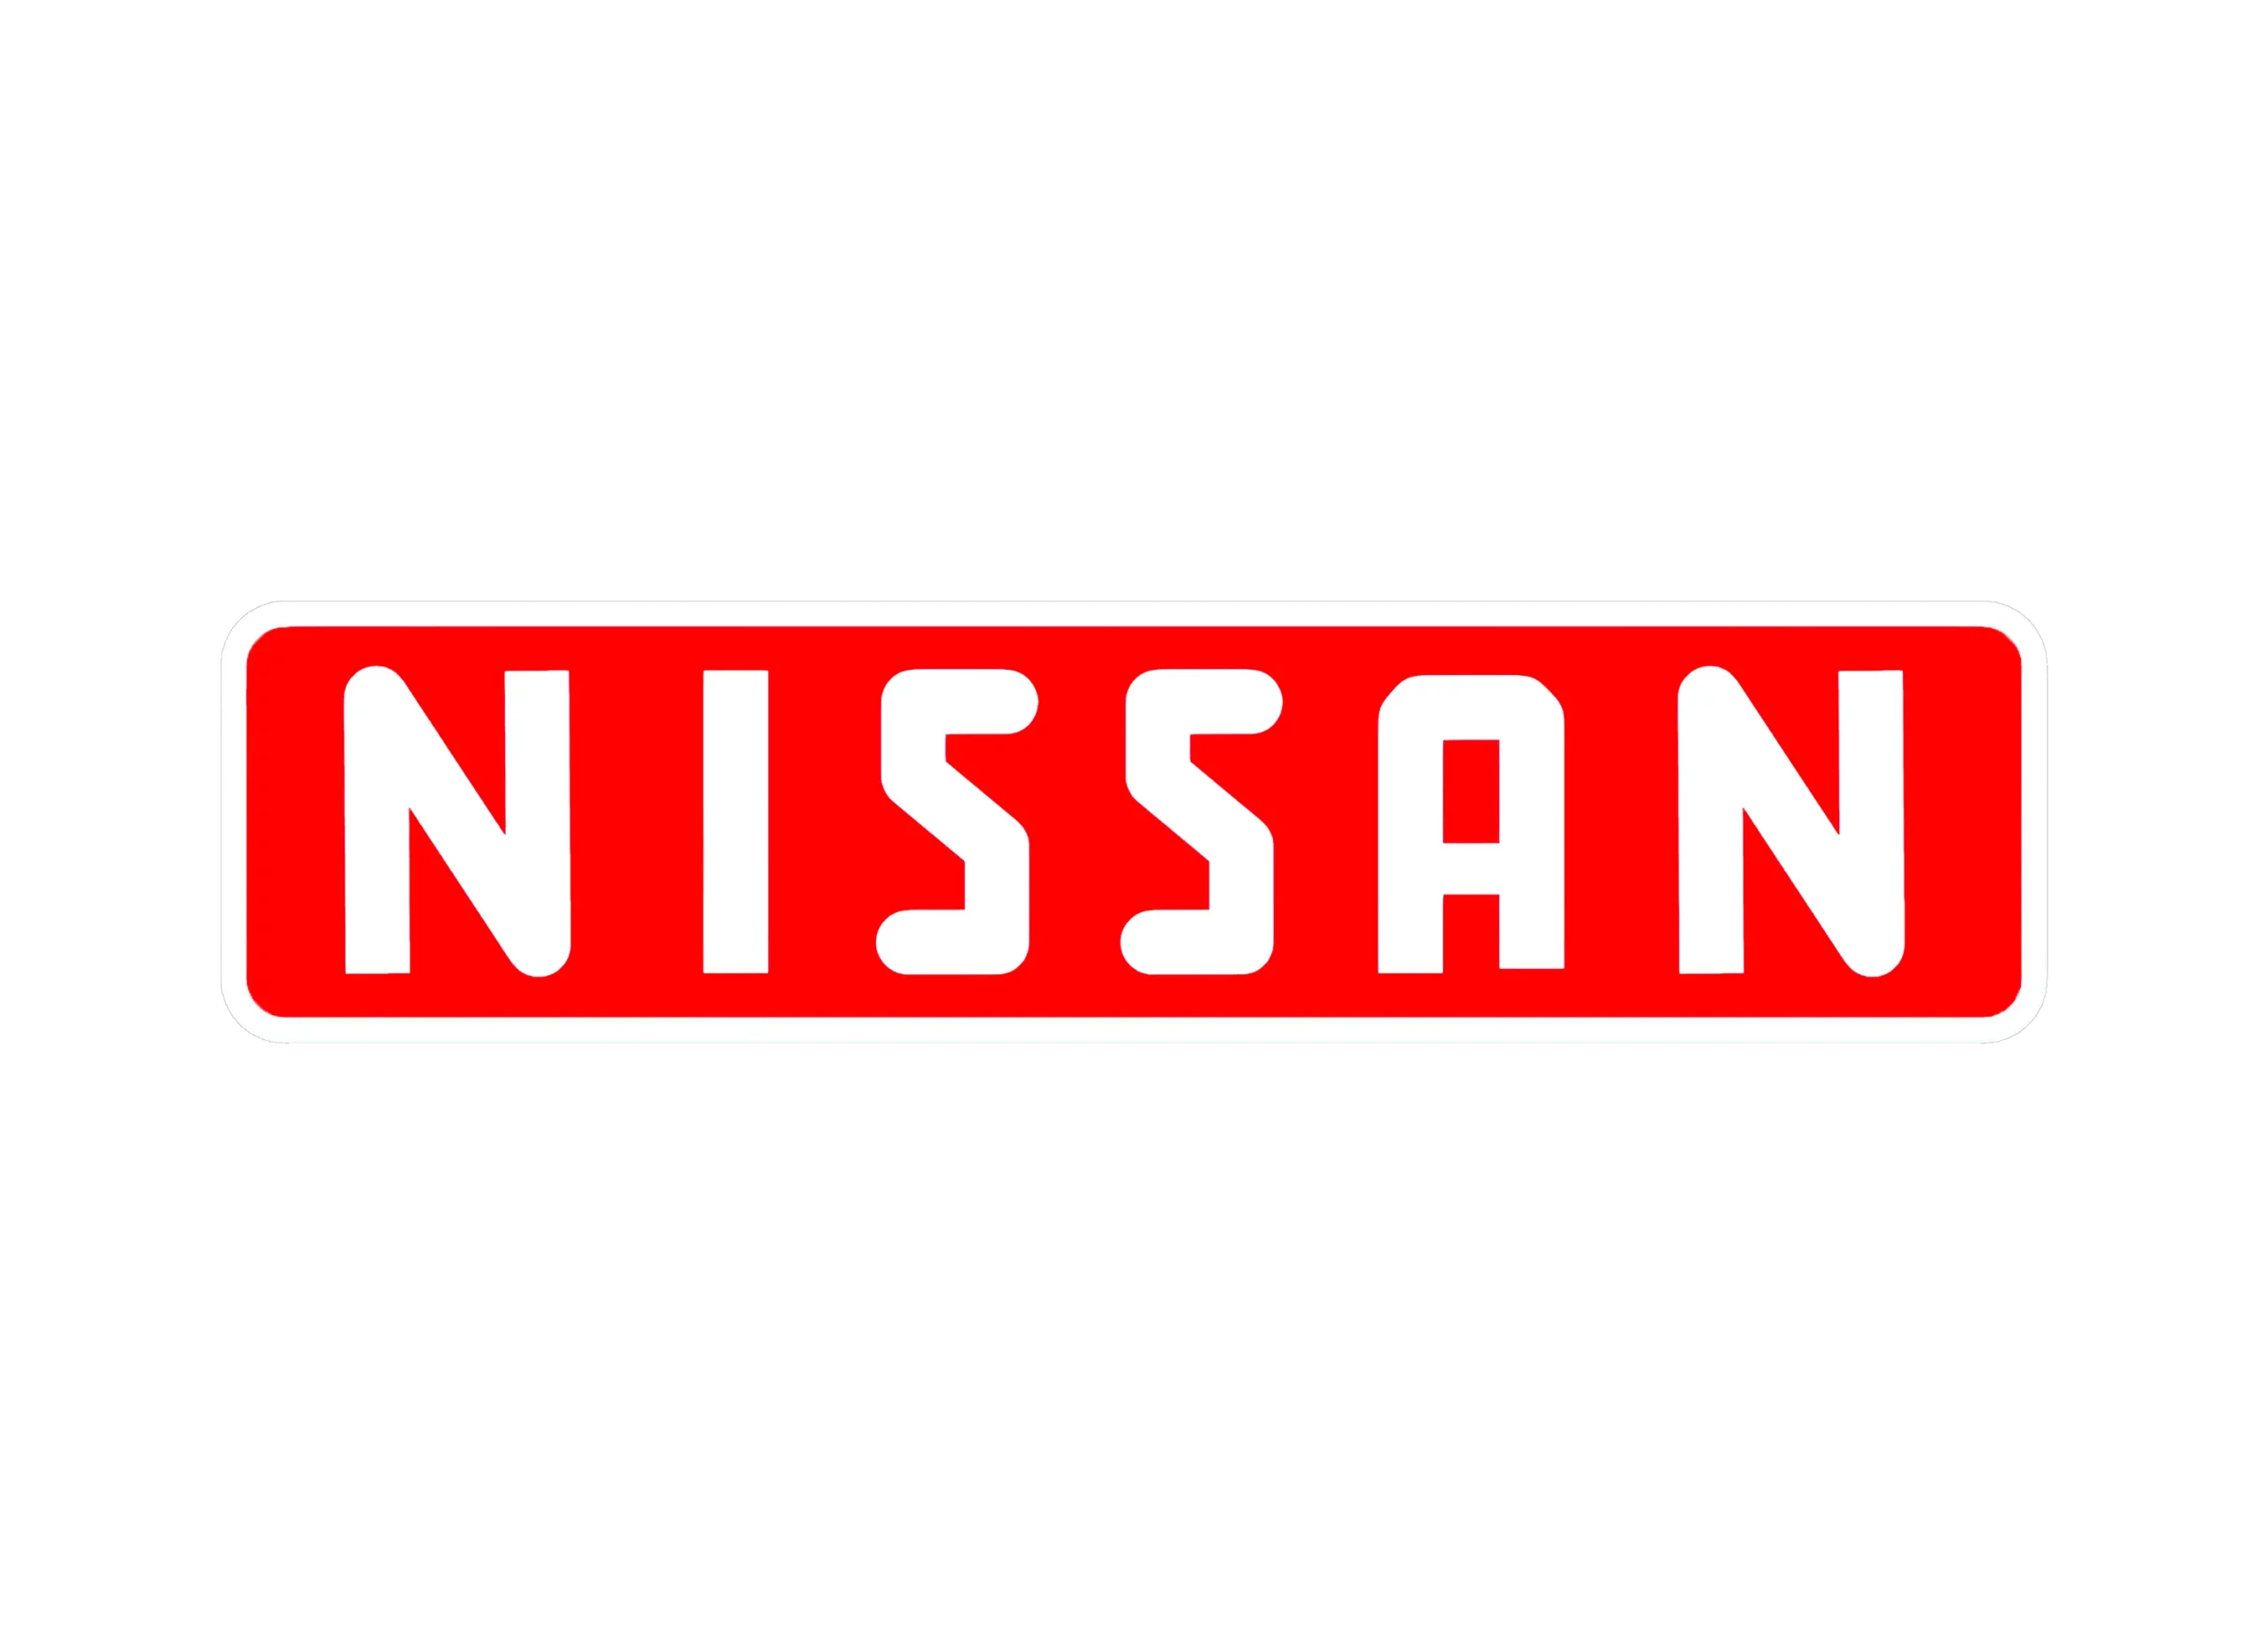 Nissan logo 1950-1959